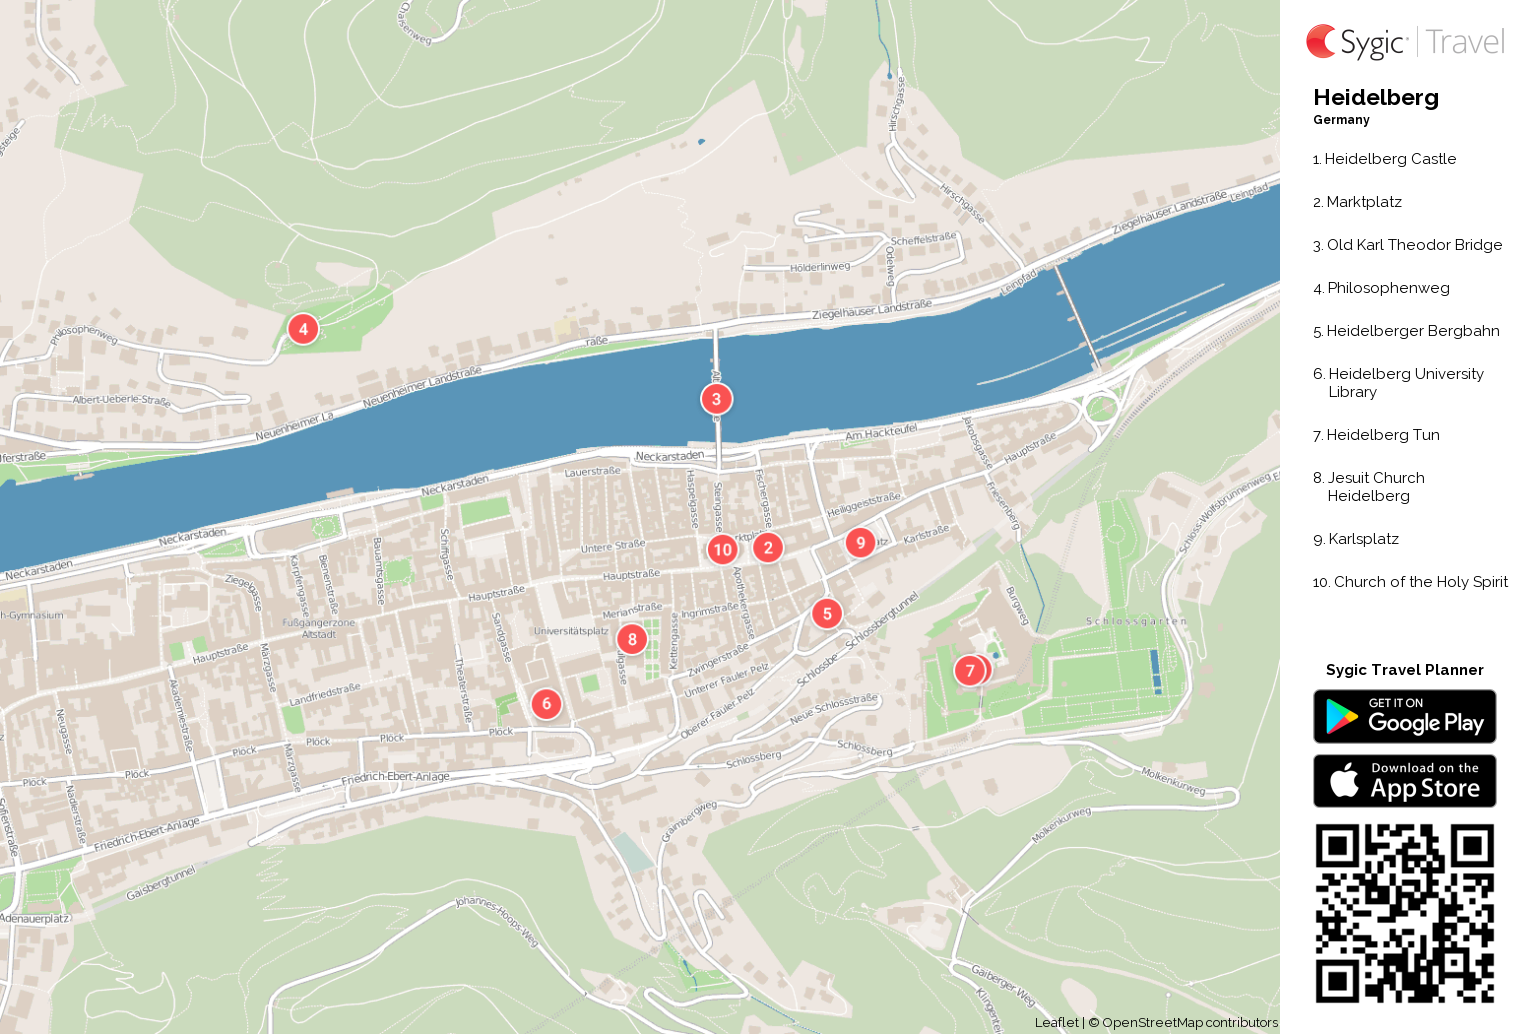 Heidelberg Printable Tourist Map | Sygic Travel